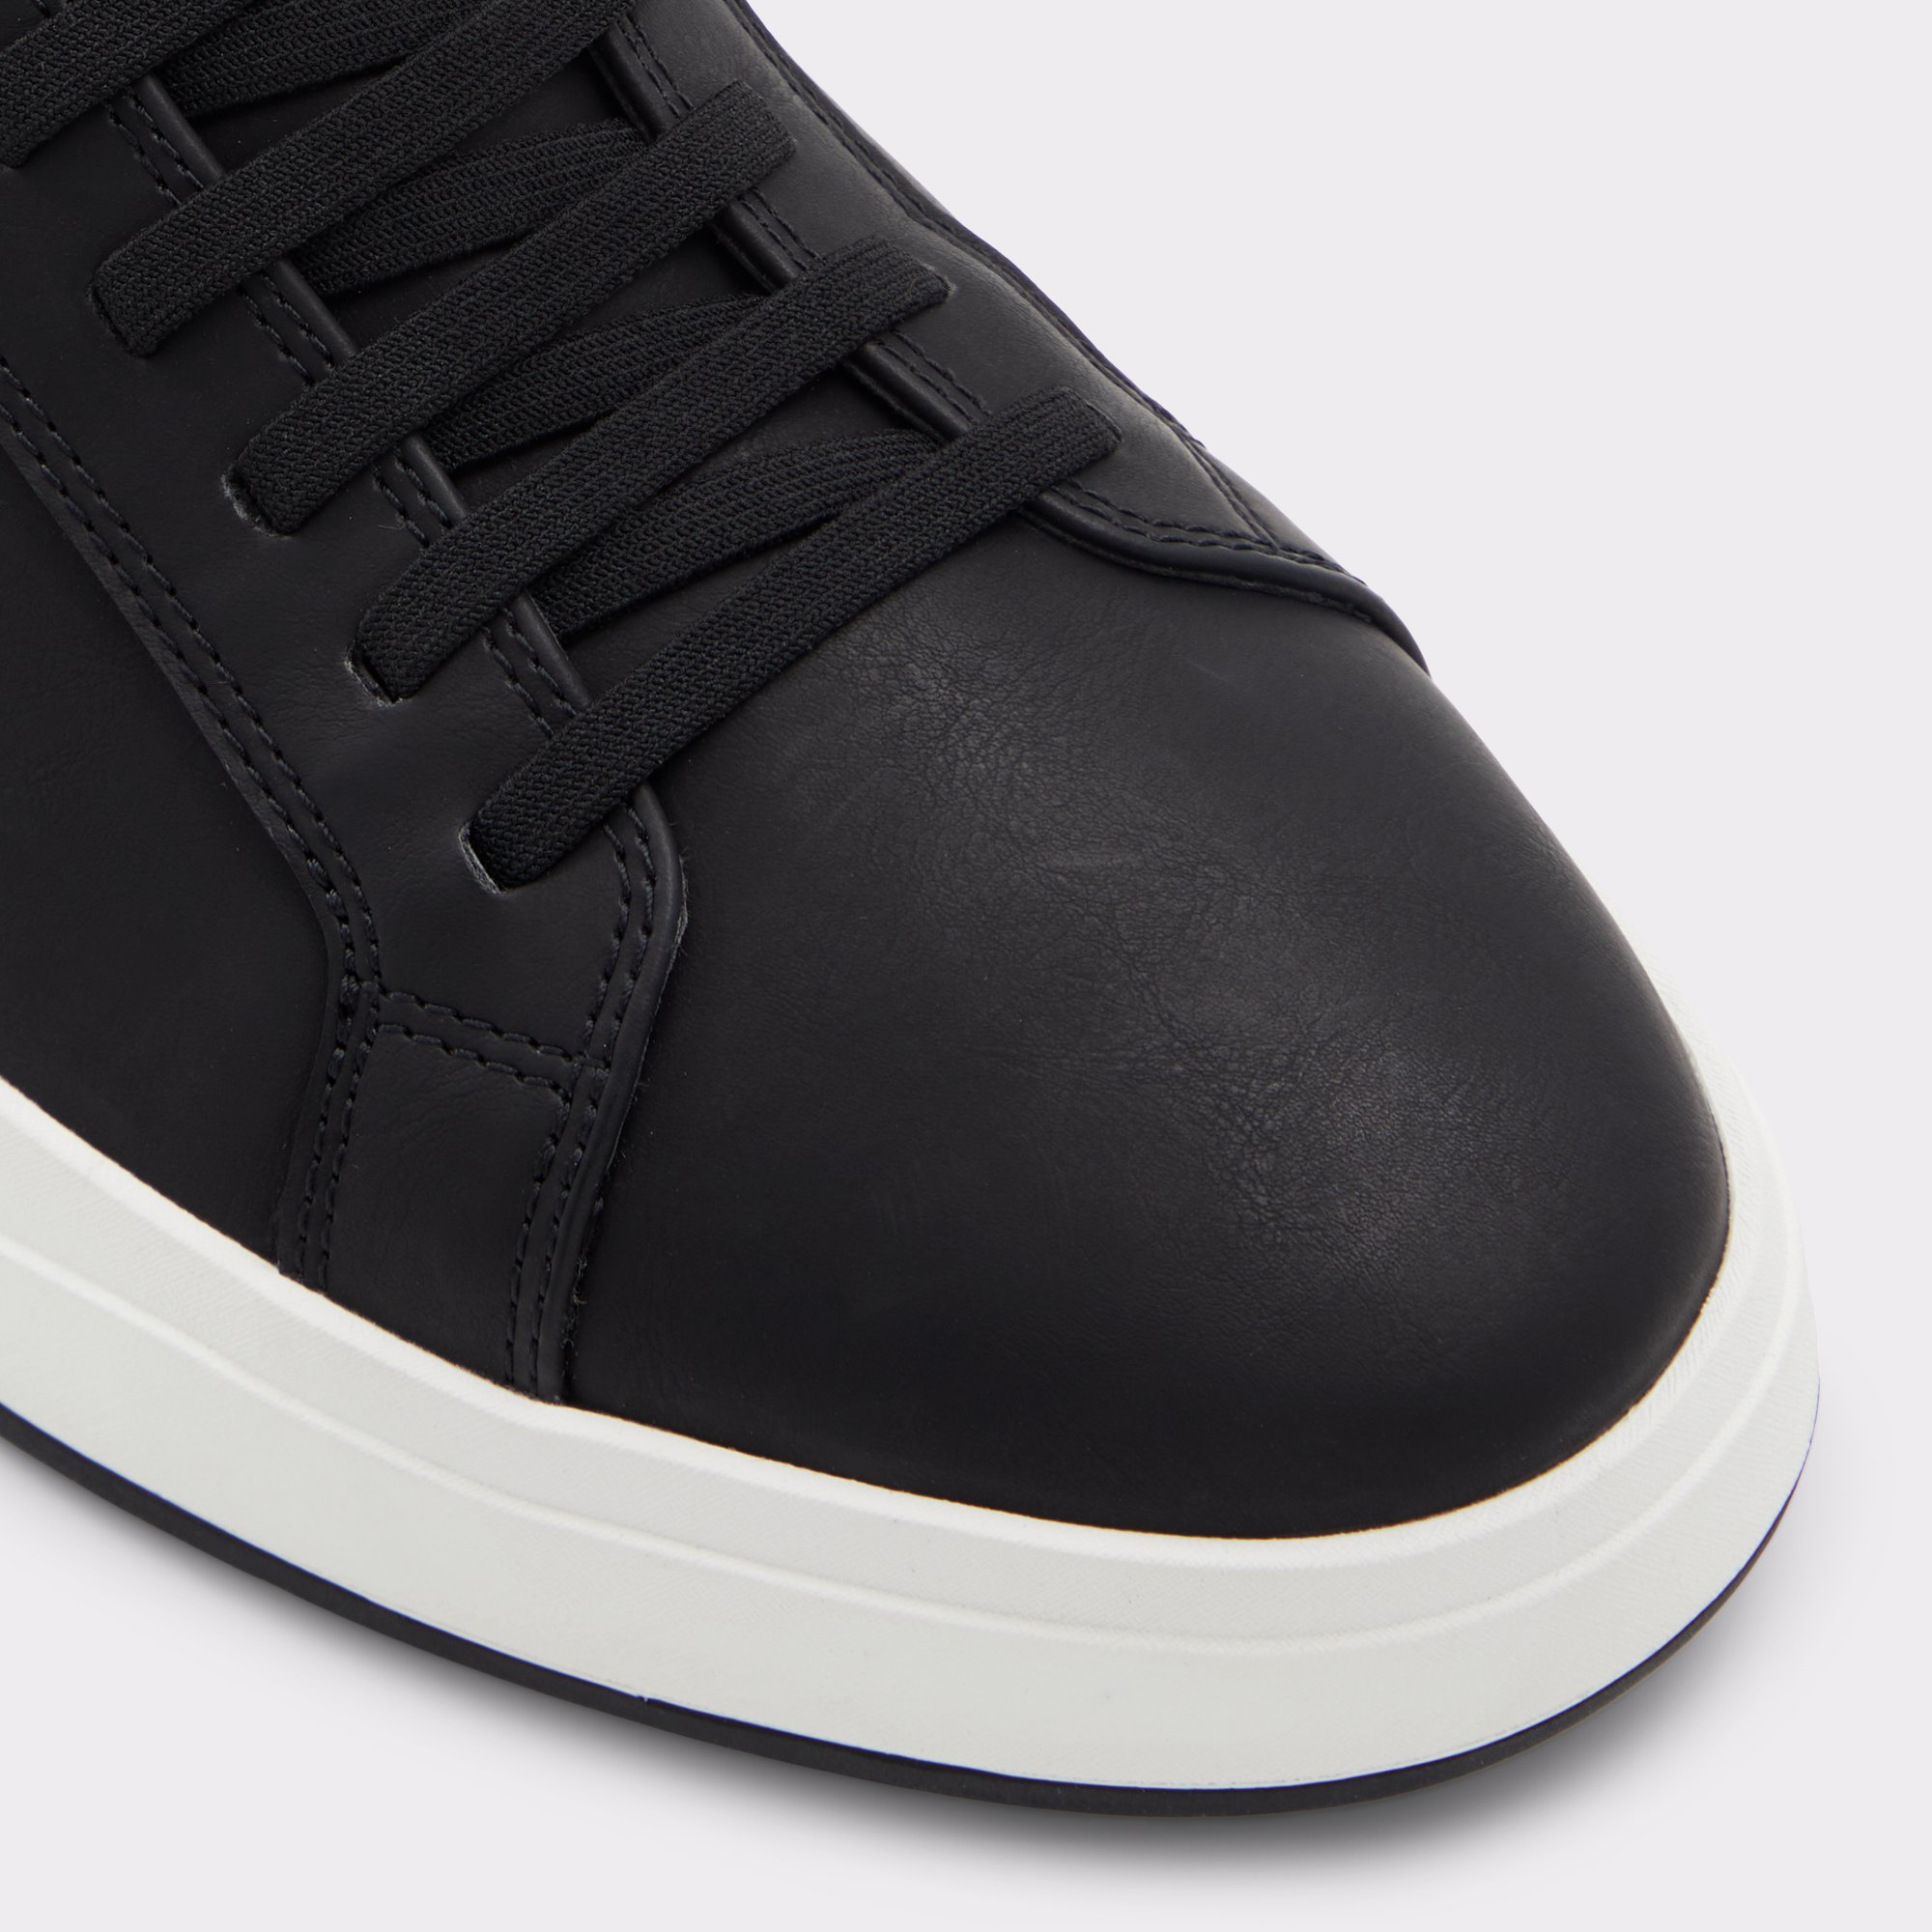 Invictus Black Synthetic Smooth Men's Sneakers | ALDO US